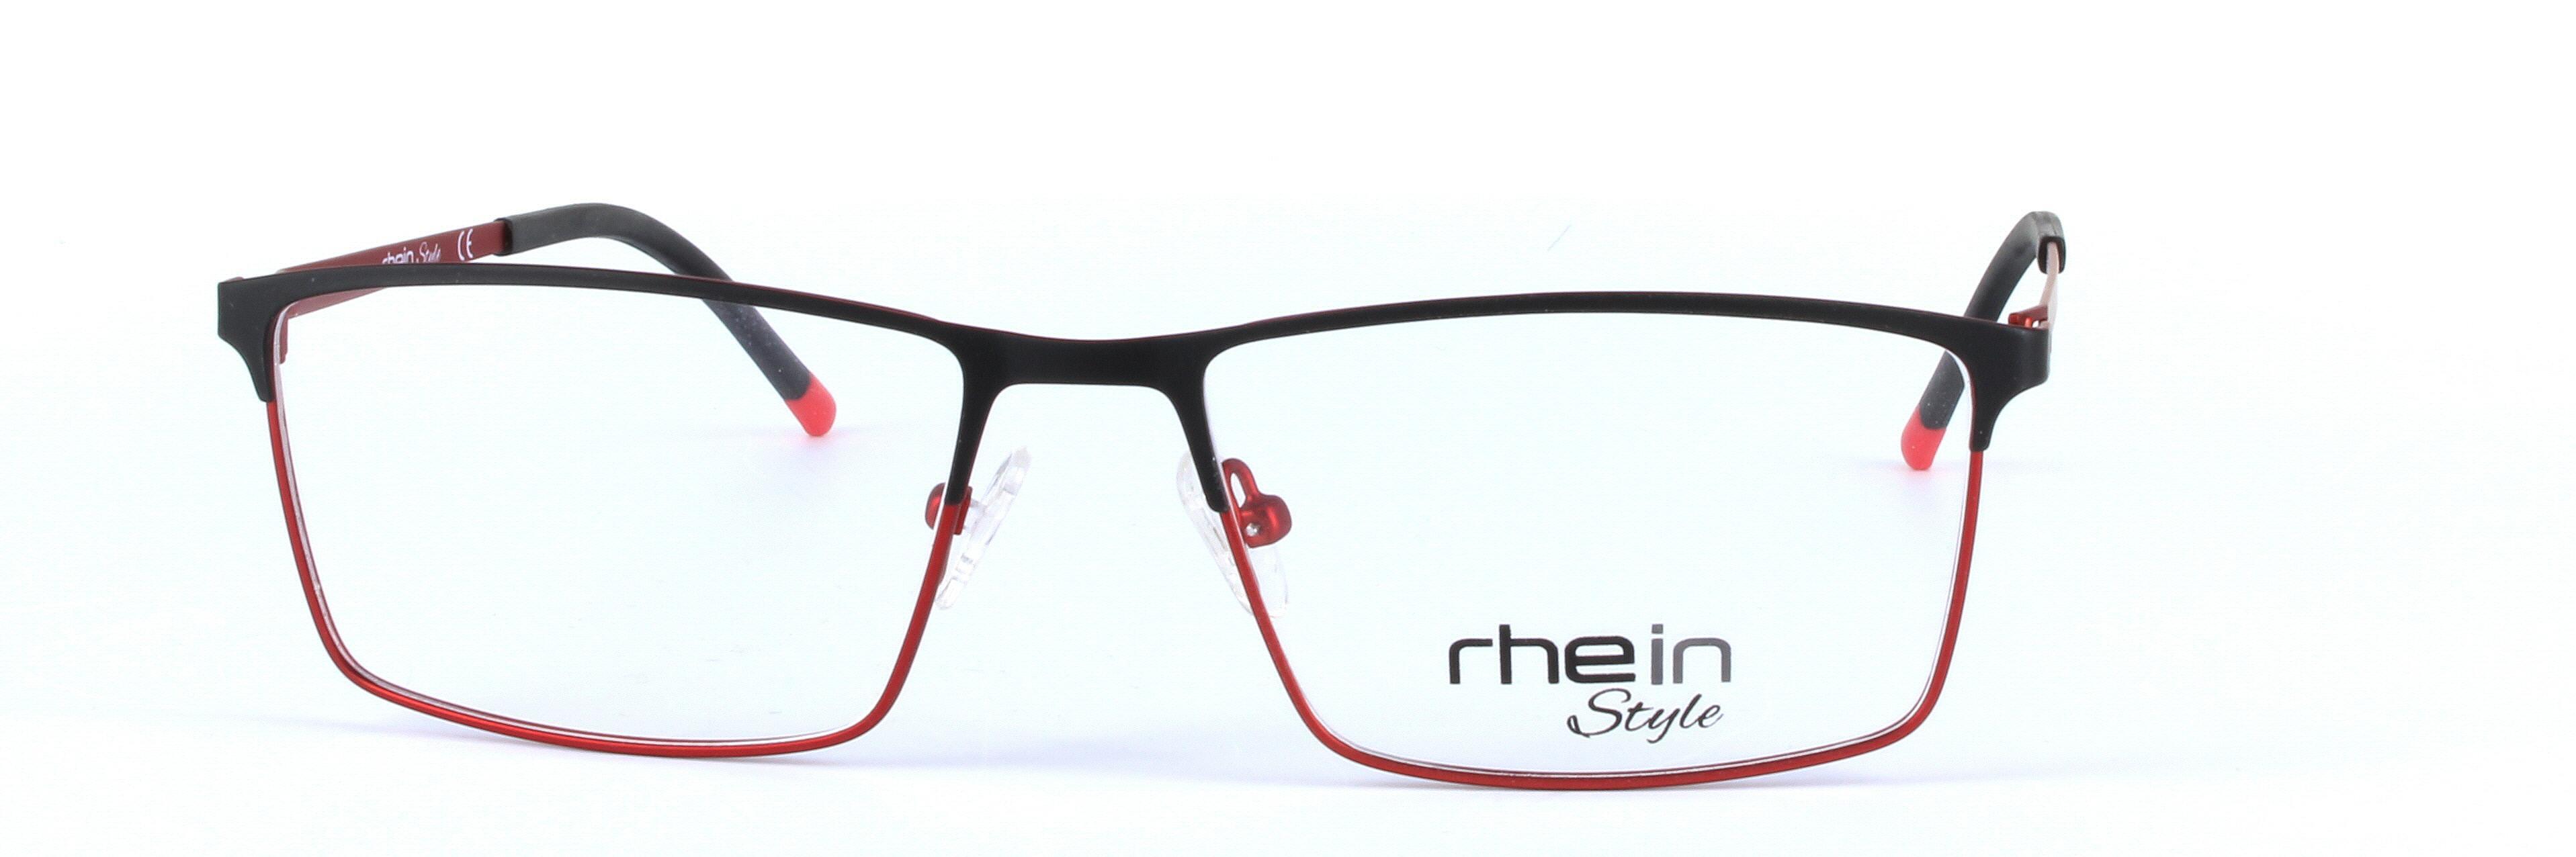 Mitchell Black Full Rim Rectangular Metal Glasses - Image View 5